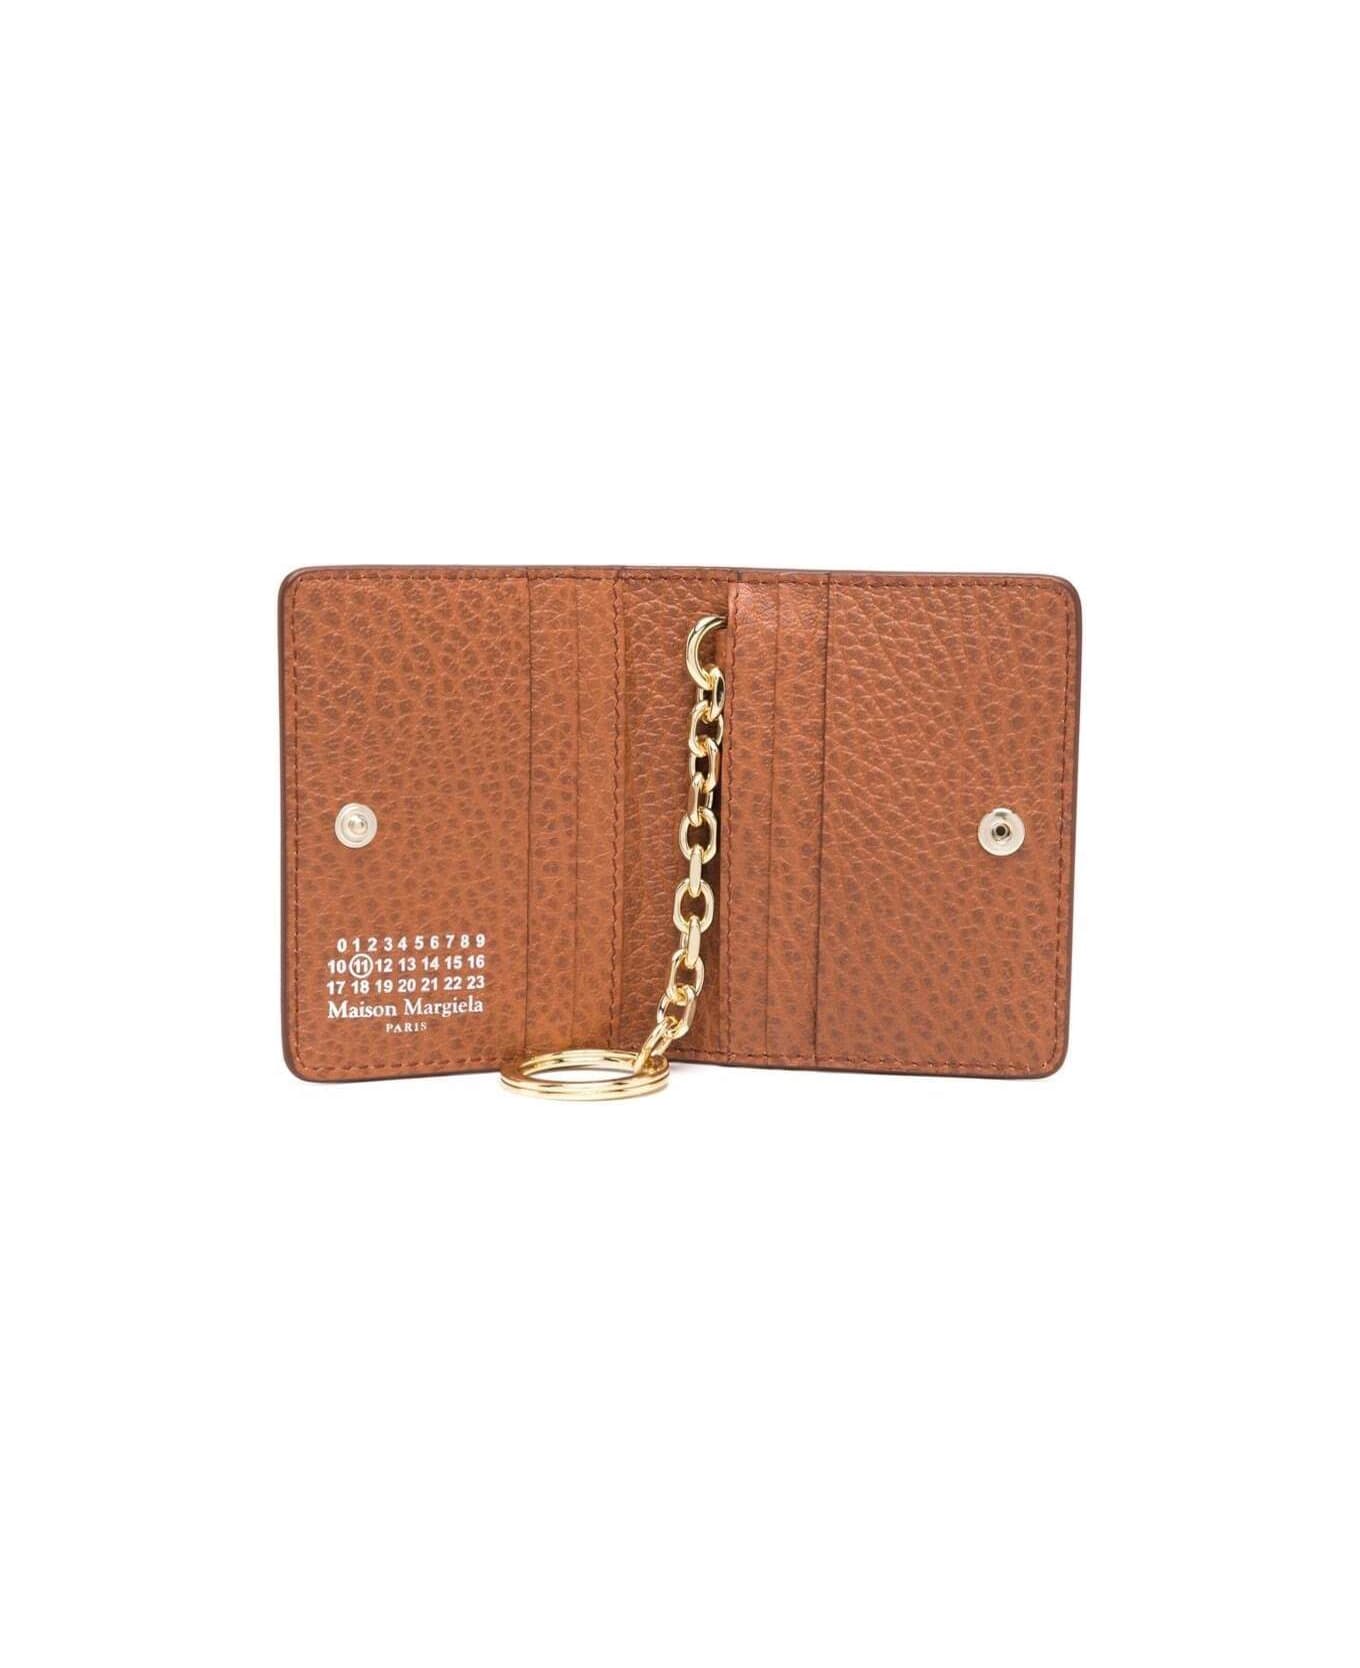 Maison Margiela Beige Cardholder With Inner Chain In Grainy Leather Woman Maison Margiela - Beige